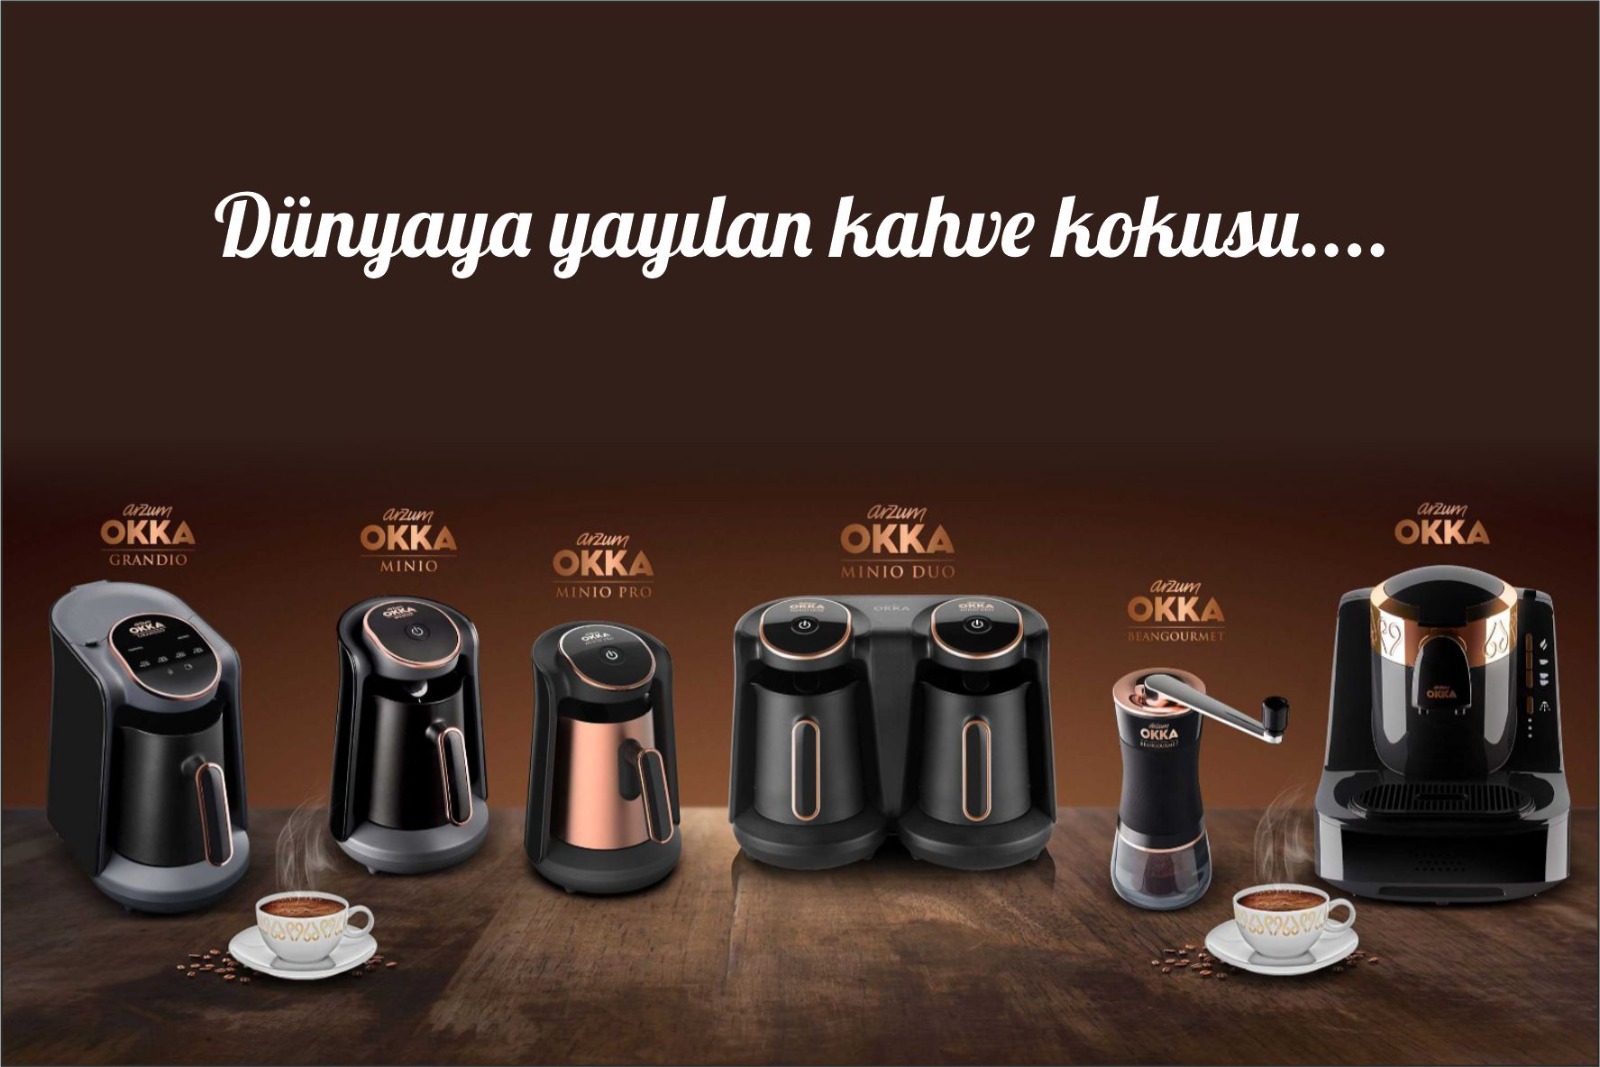 https://homegoodscyprus.com/kucuk-ev-aletleri/turk-kahve-makineleri